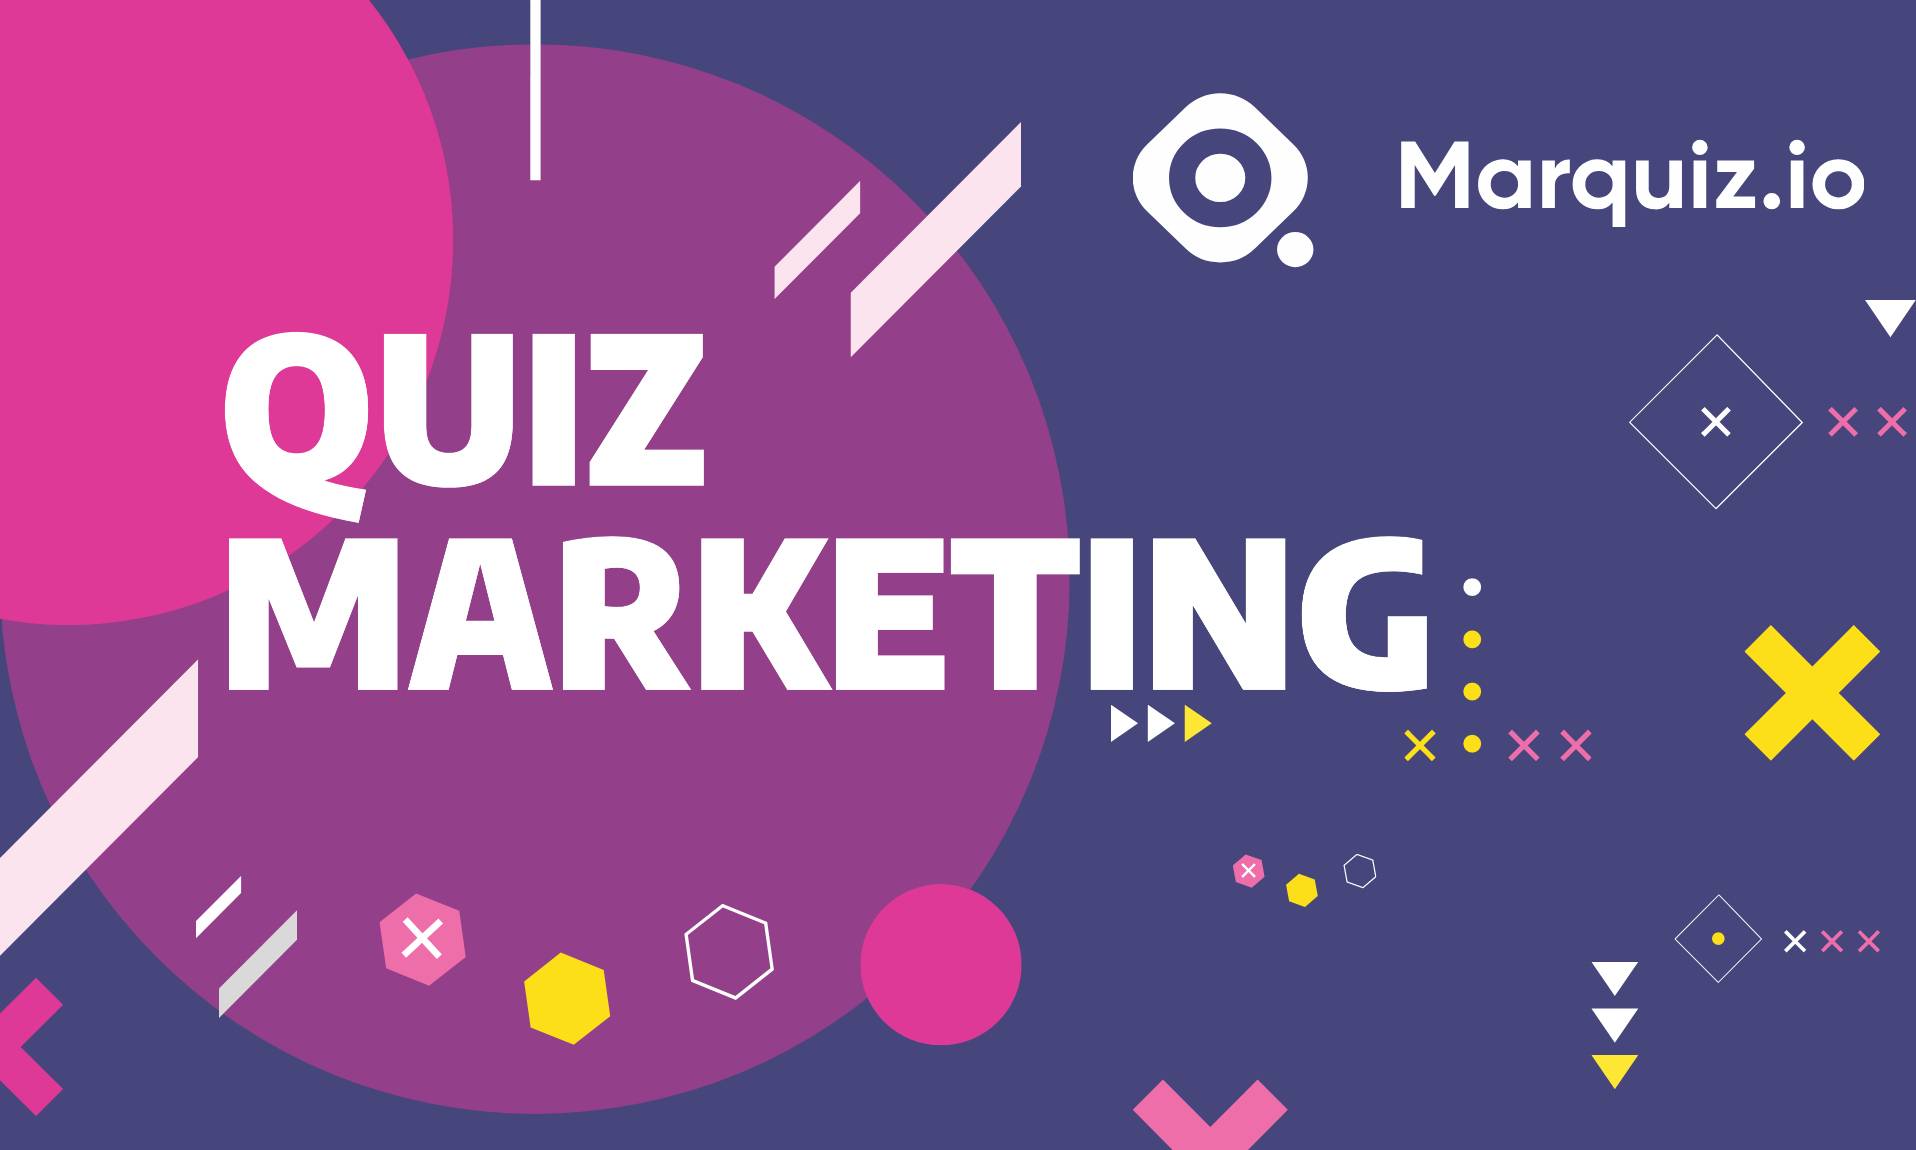 Marquiz - Quiz Marketing Is A New Innovative Lead Magnet